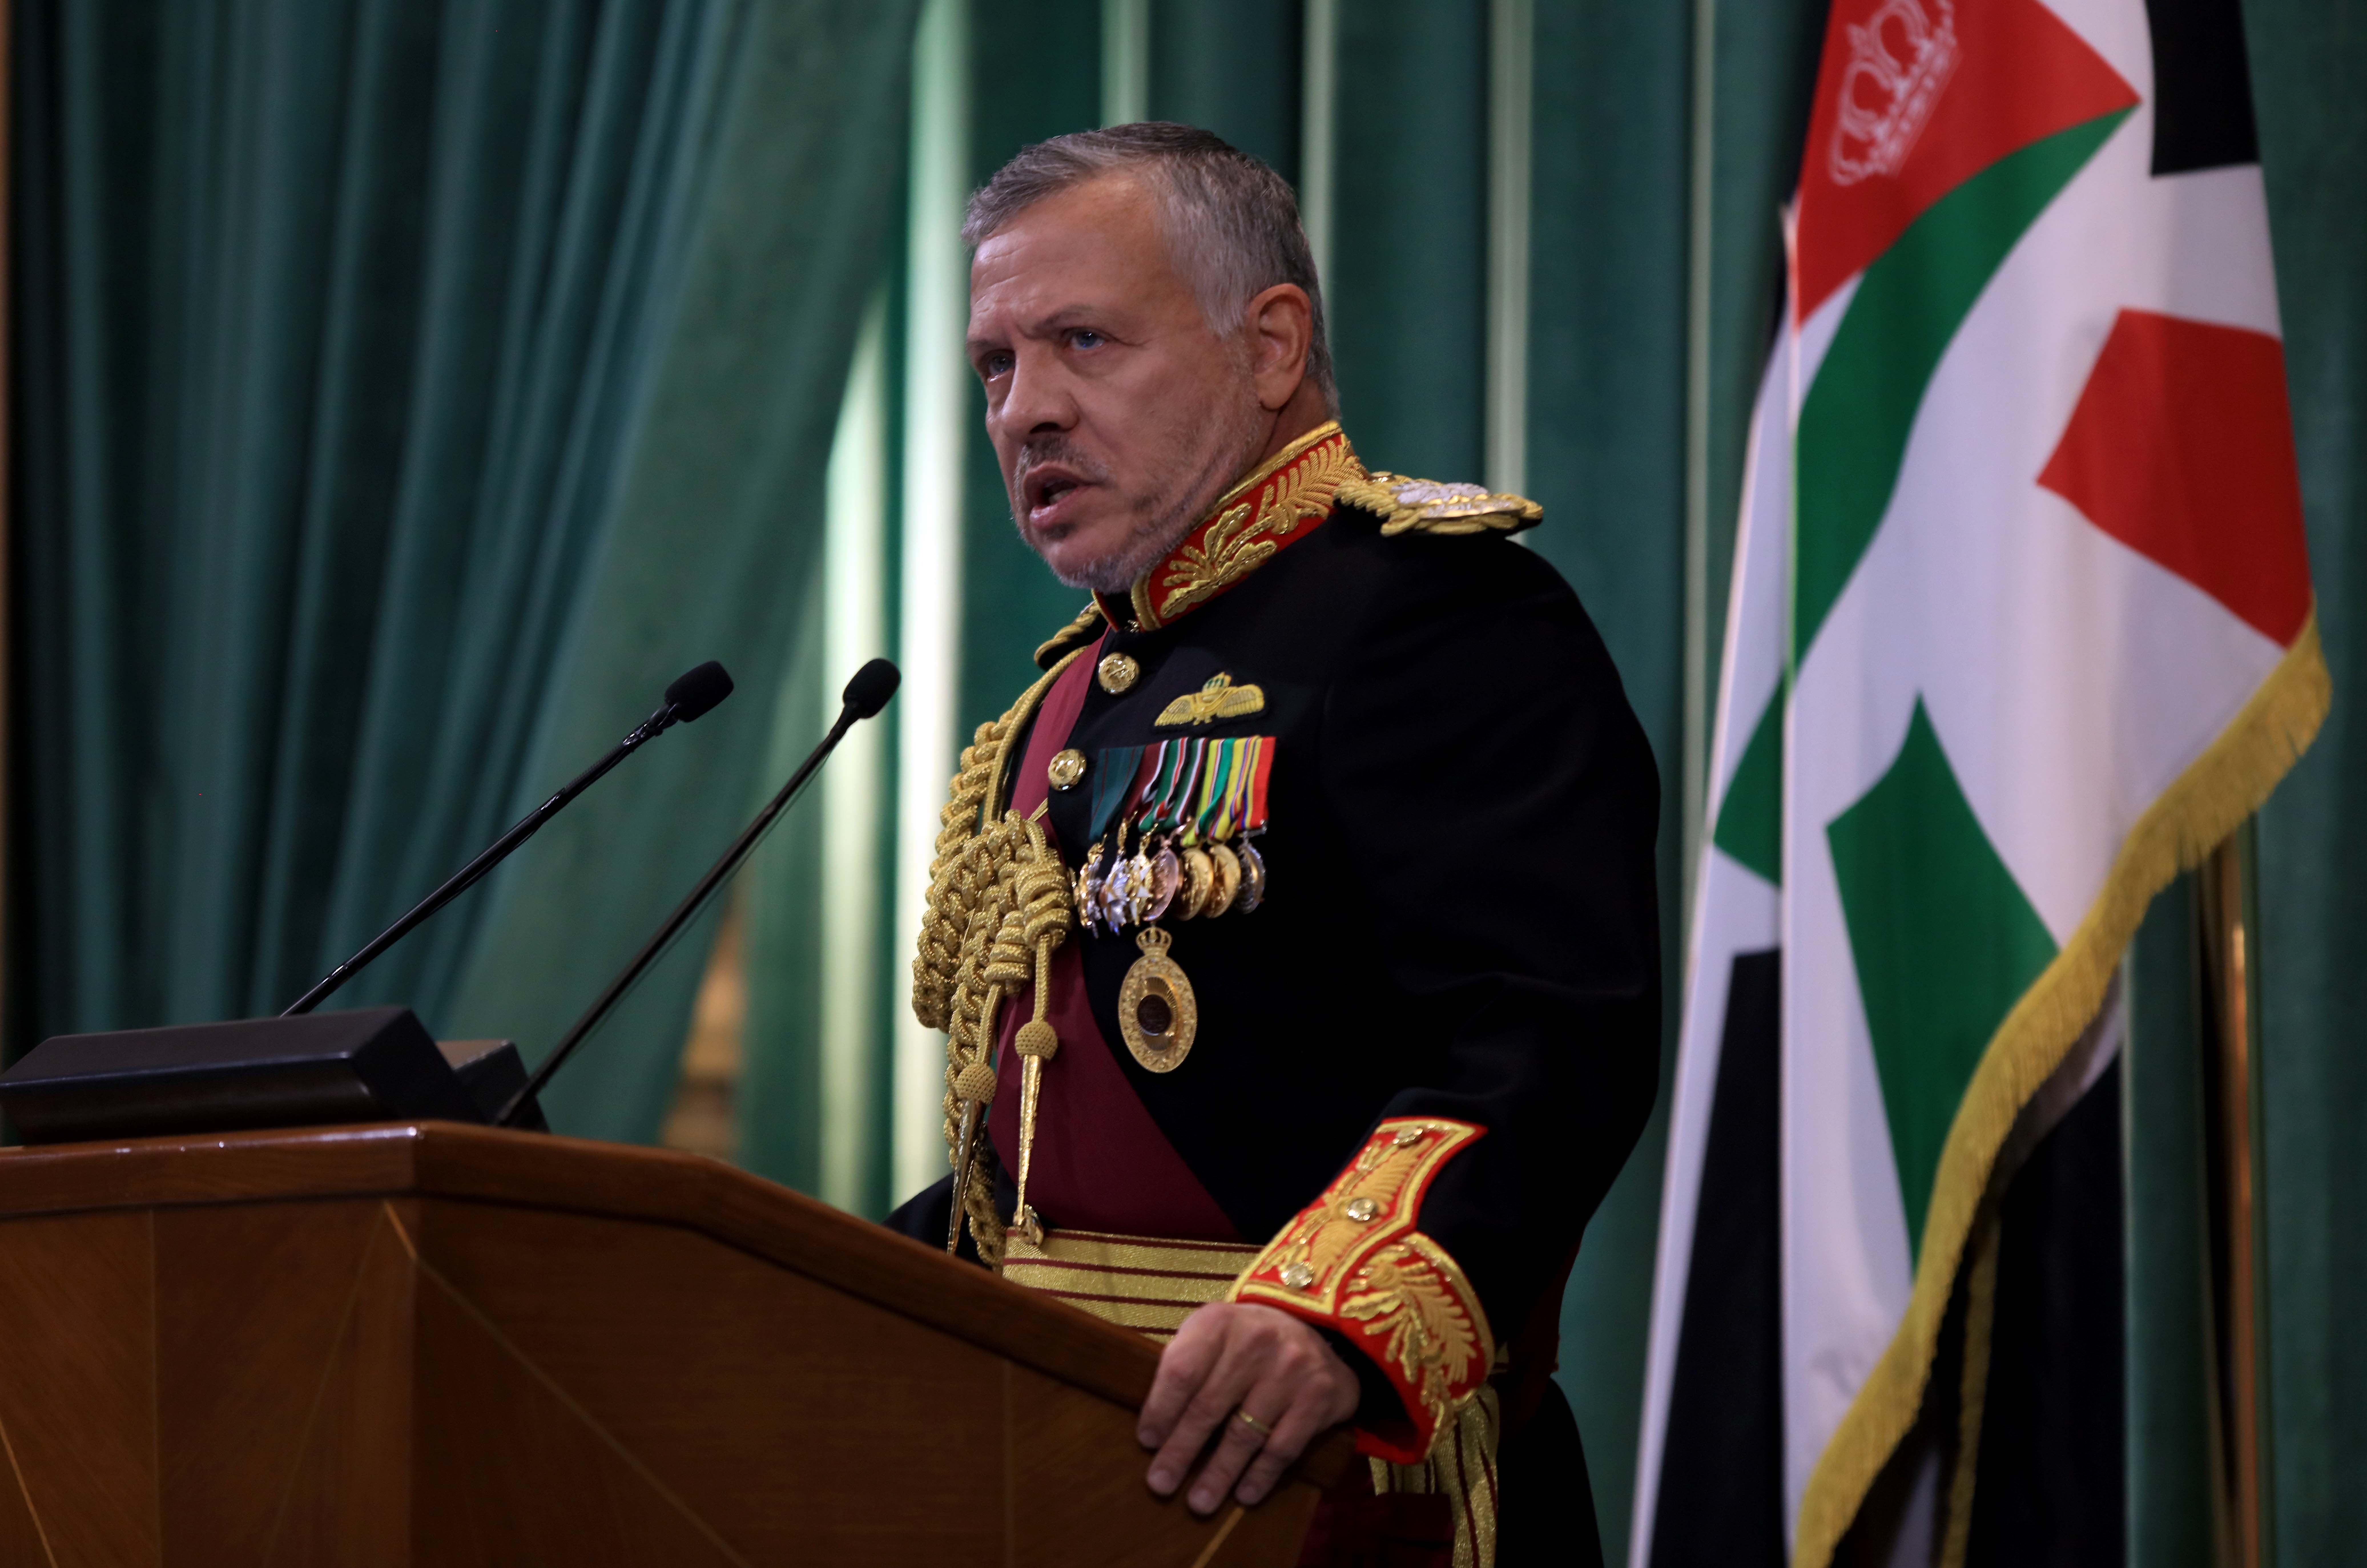 El rey Abdullah II de Jordania (Europa Press)

